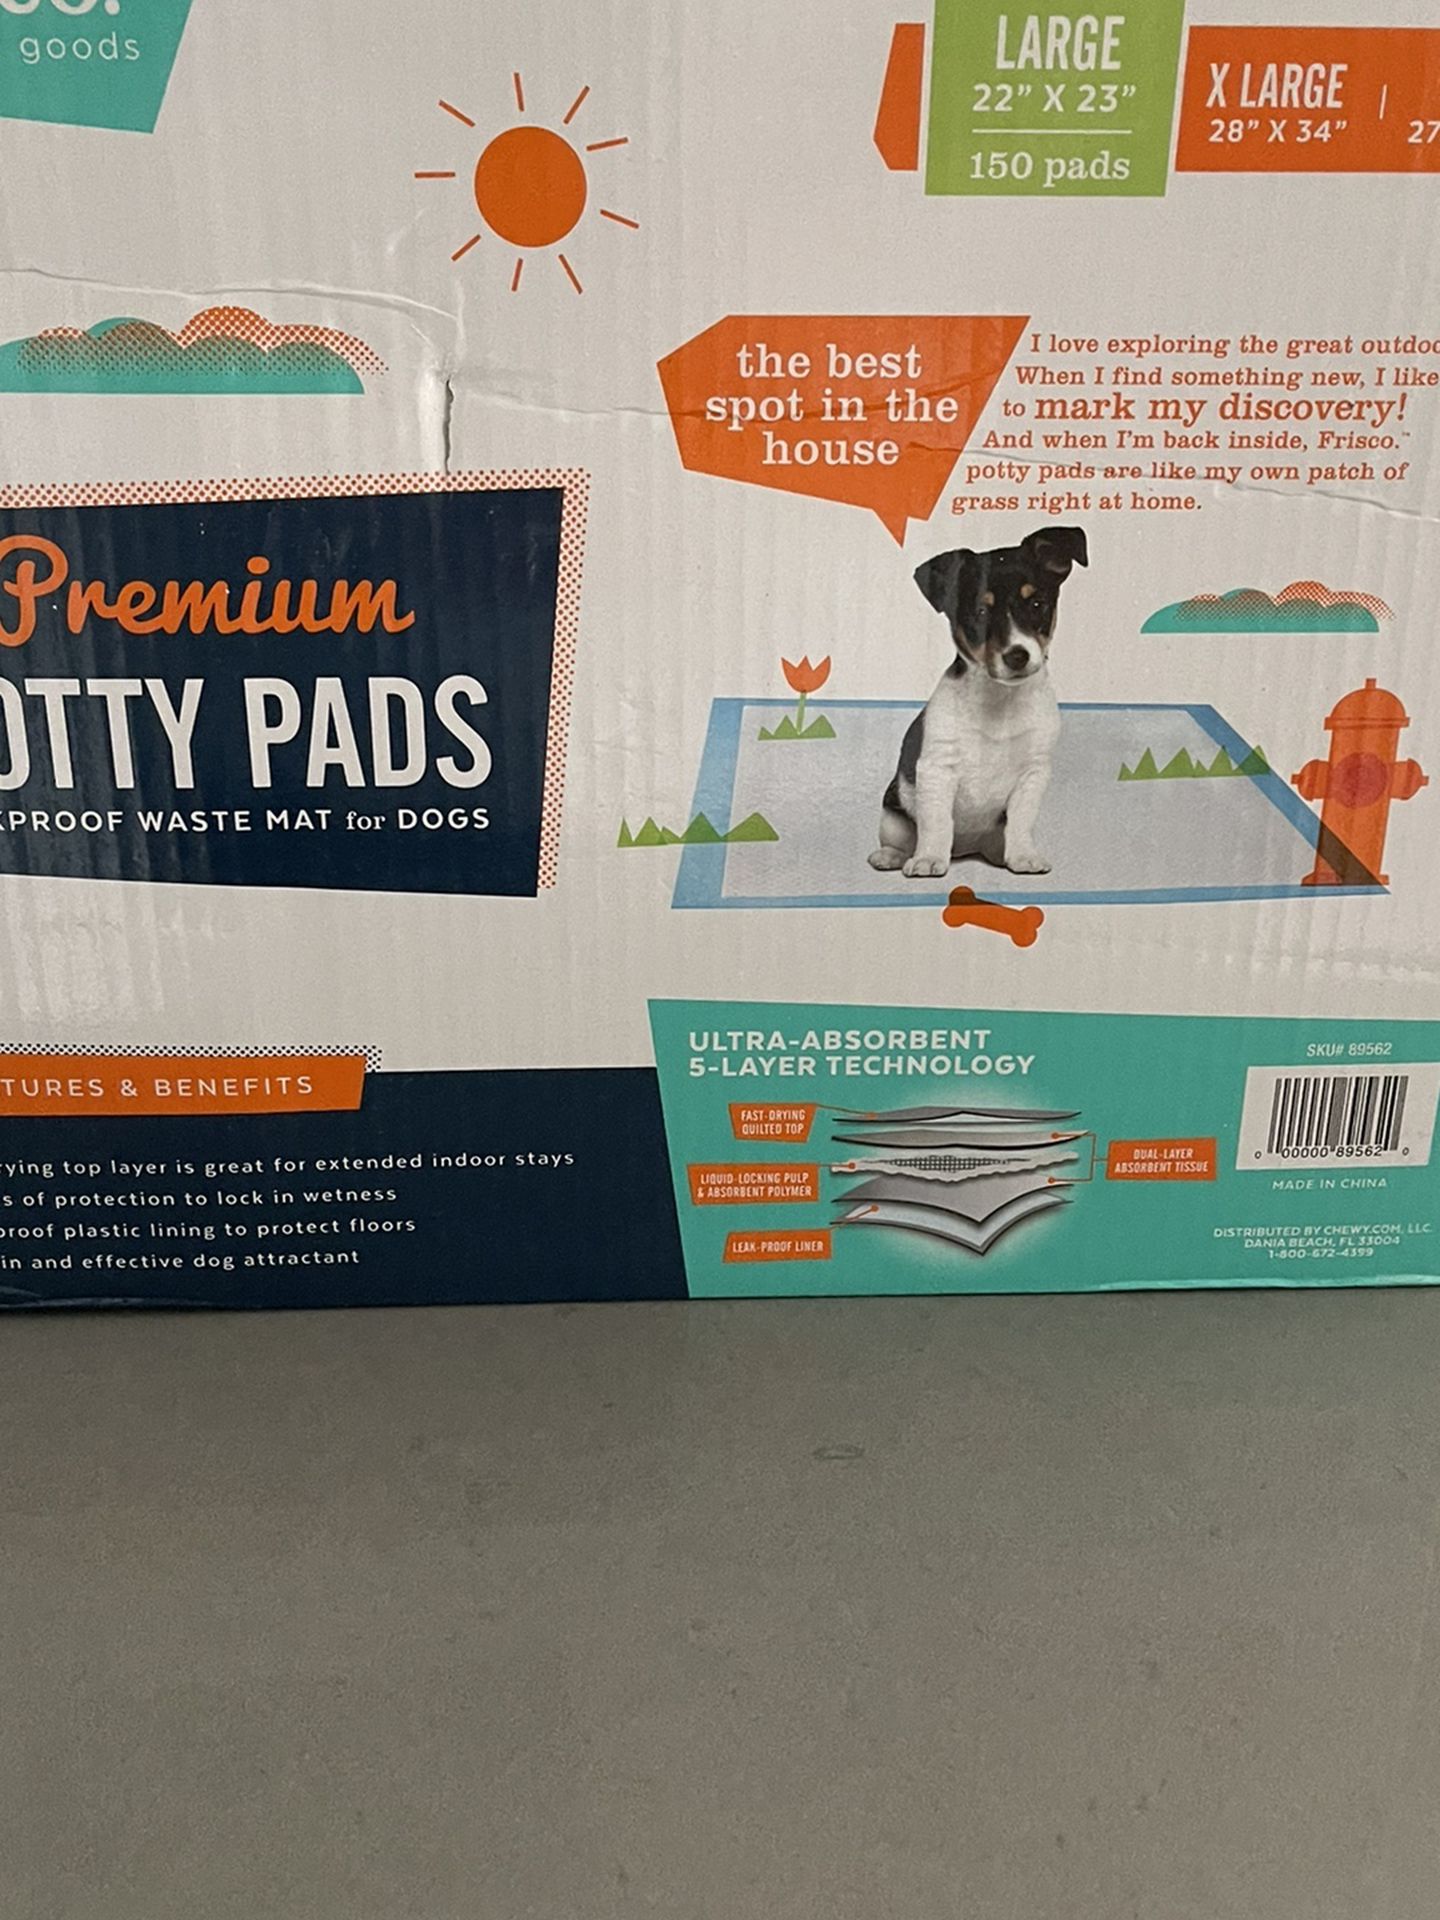 Frisco - Premium Potty Pads (150 Pads)